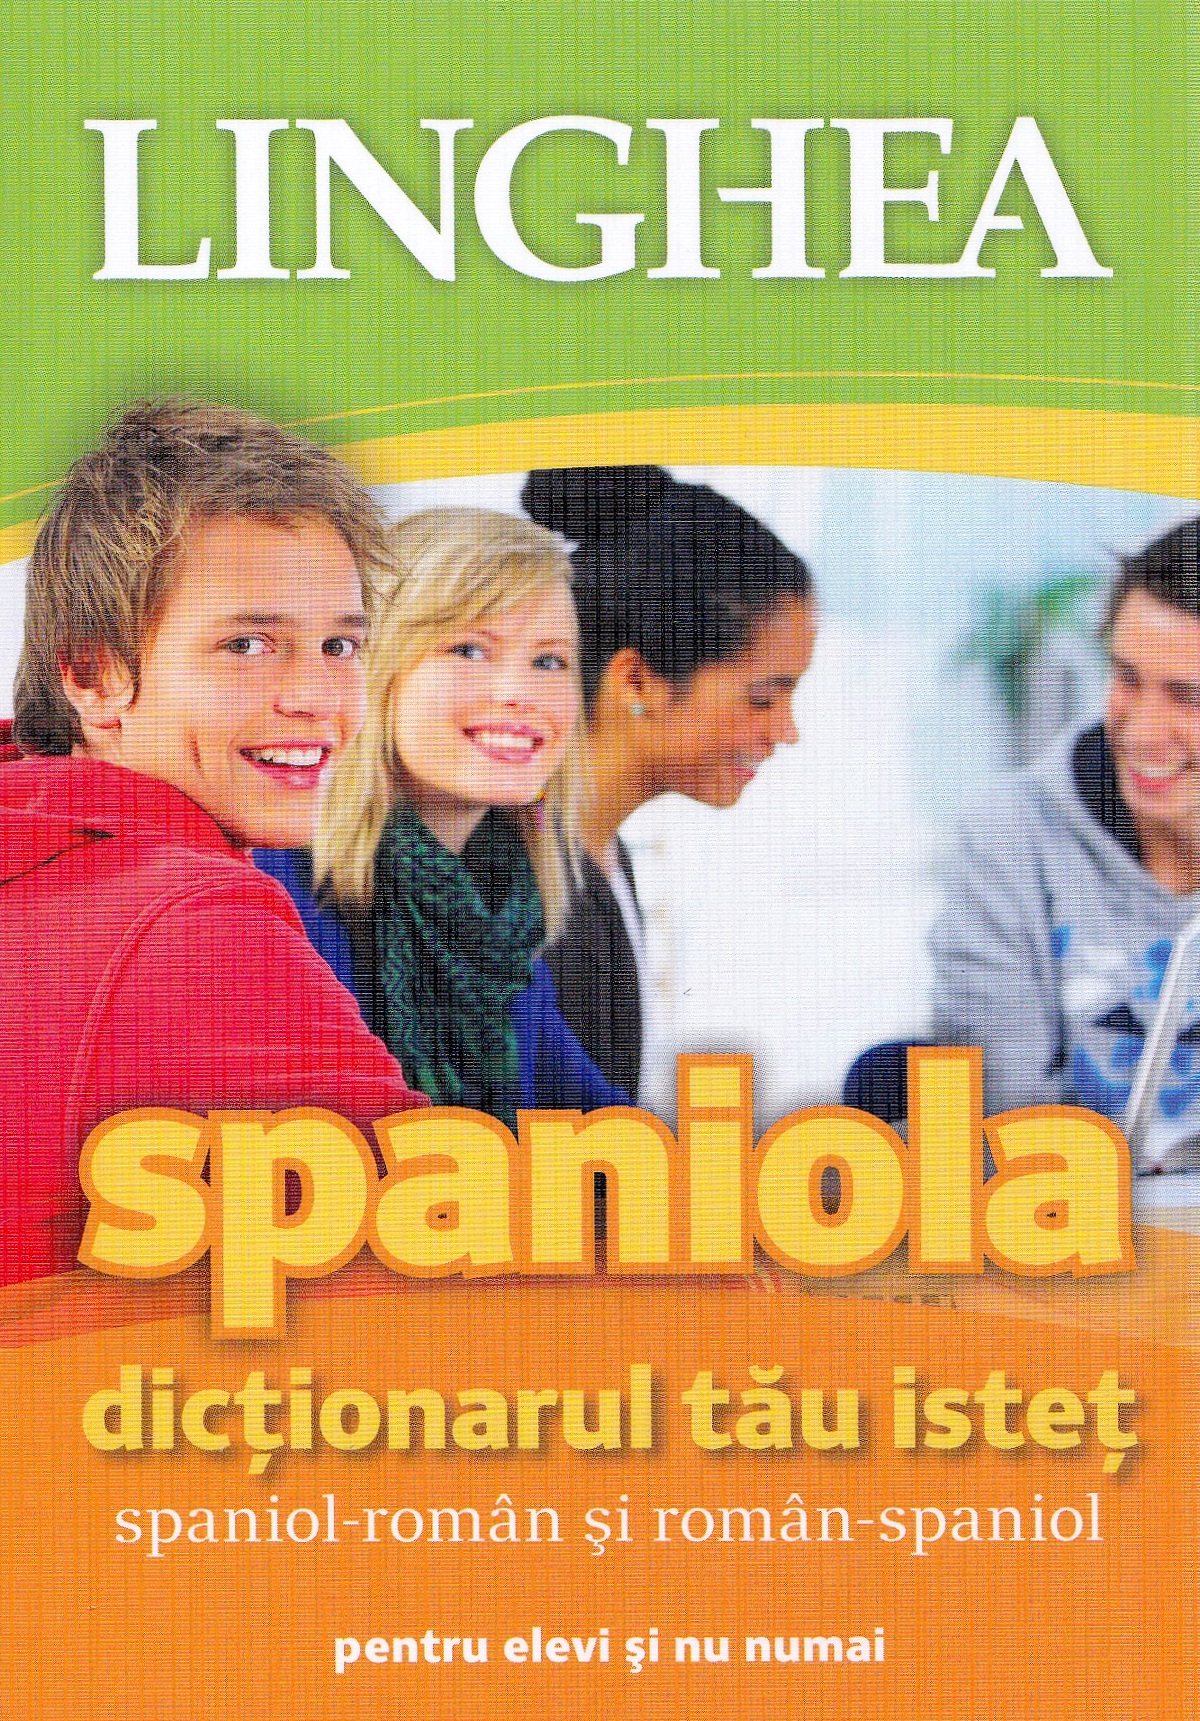 Spaniola. Dictionarul tau istet spaniol-roman, roman-spaniol